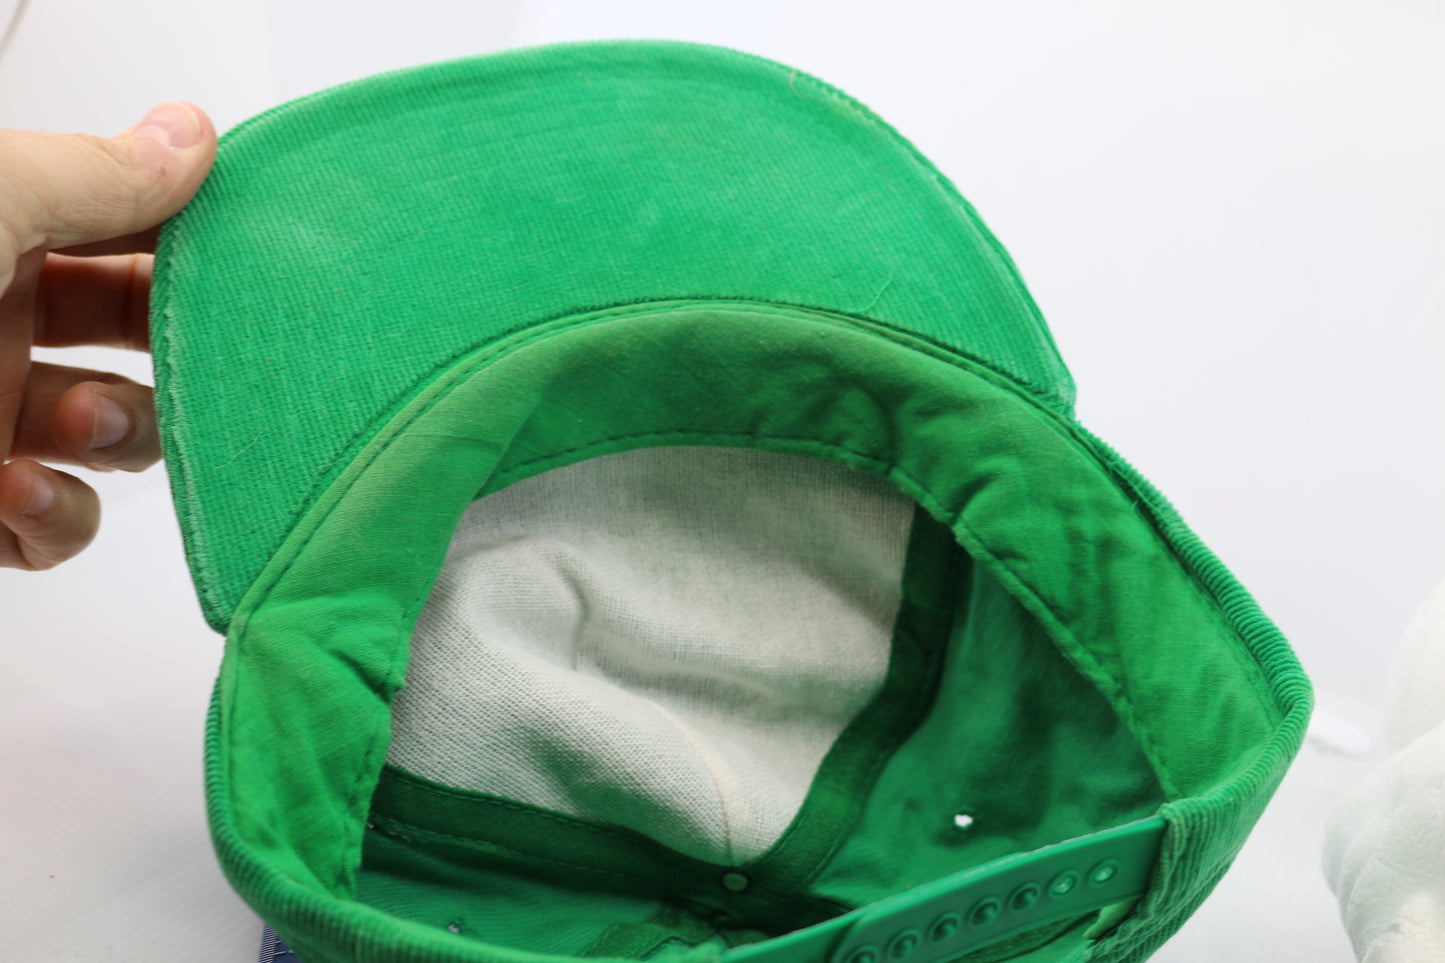 🔥RARE Enjoy Sprite Vintage Vtg Green Corduroy Mesh Snapback Hat Cap